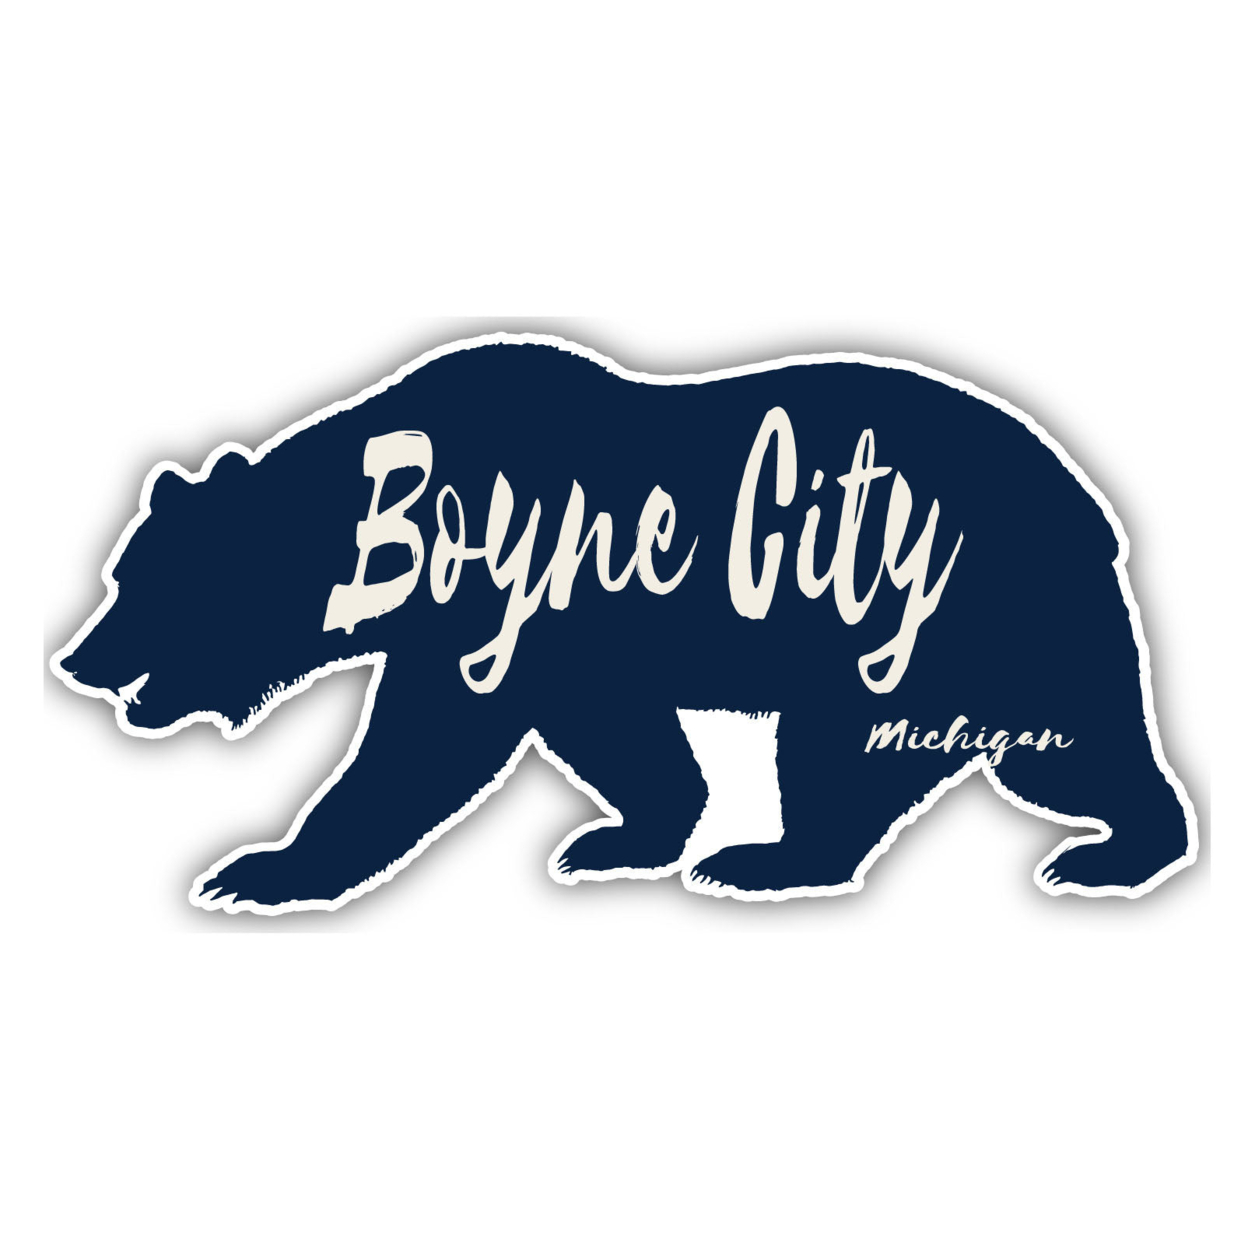 Boyne City Michigan Souvenir Decorative Stickers (Choose Theme And Size) - Single Unit, 10-Inch, Tent